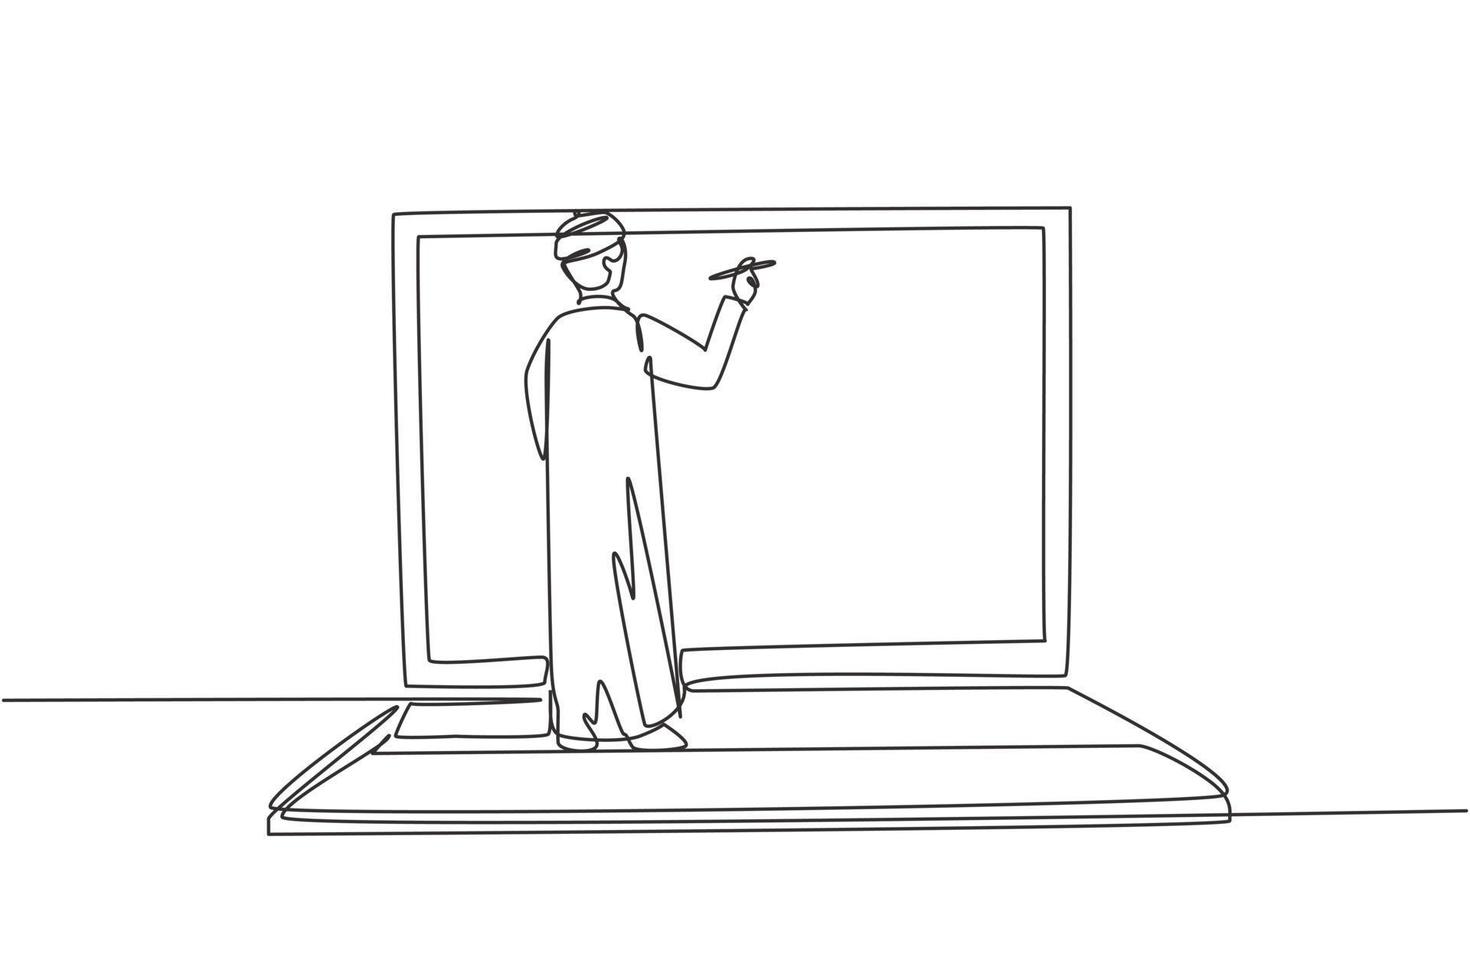 enda en rad ritning arabisk manlig högstadieelev skriver på en gigantisk bärbar datorskärm som om han skrev på whiteboard. modern kontinuerlig linje rita design grafisk vektorillustration vektor